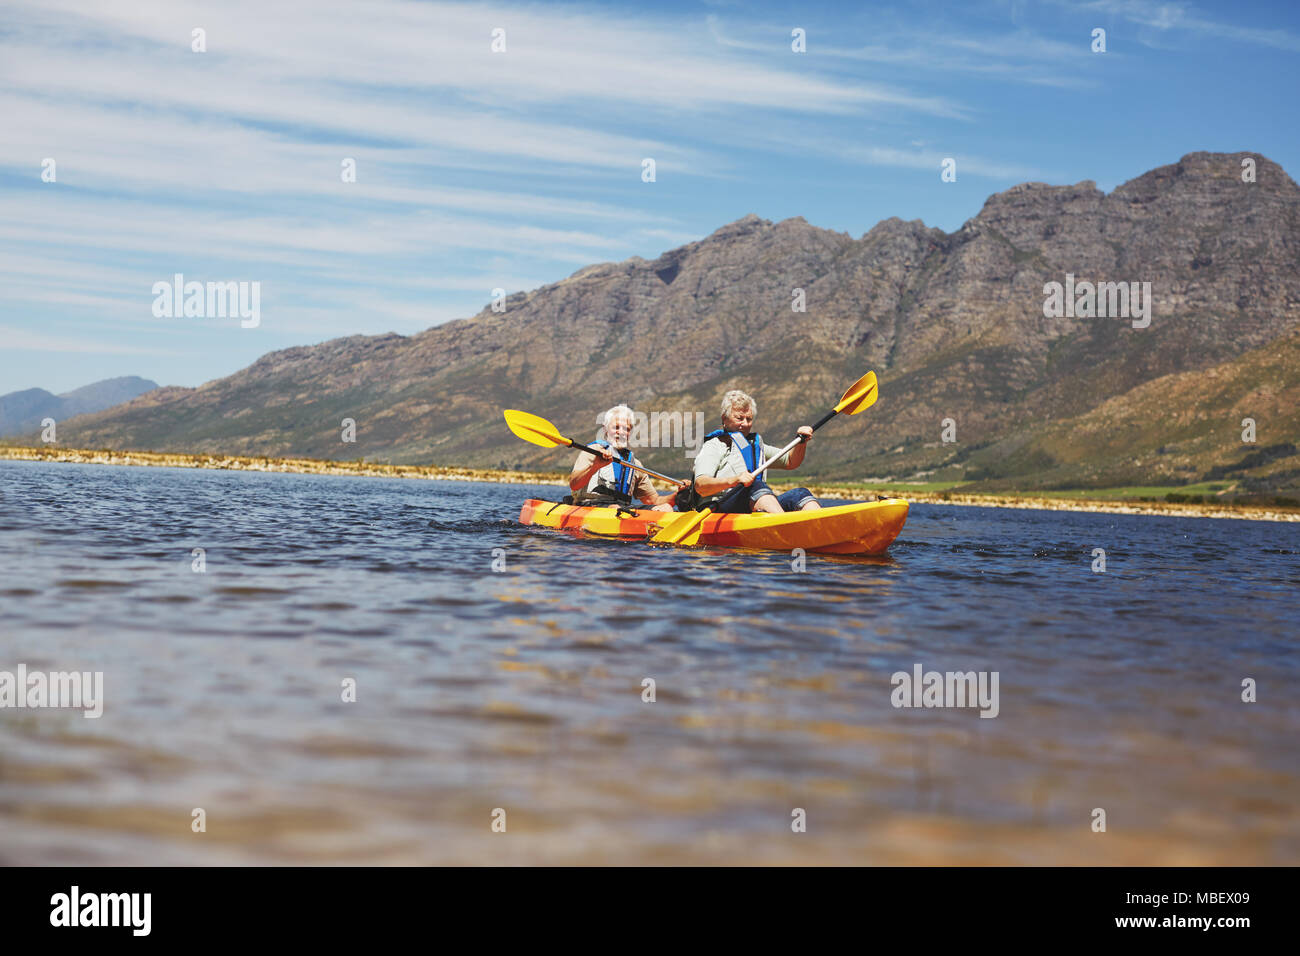 Active senior couple kayaking on sunny summer lake Stock Photo